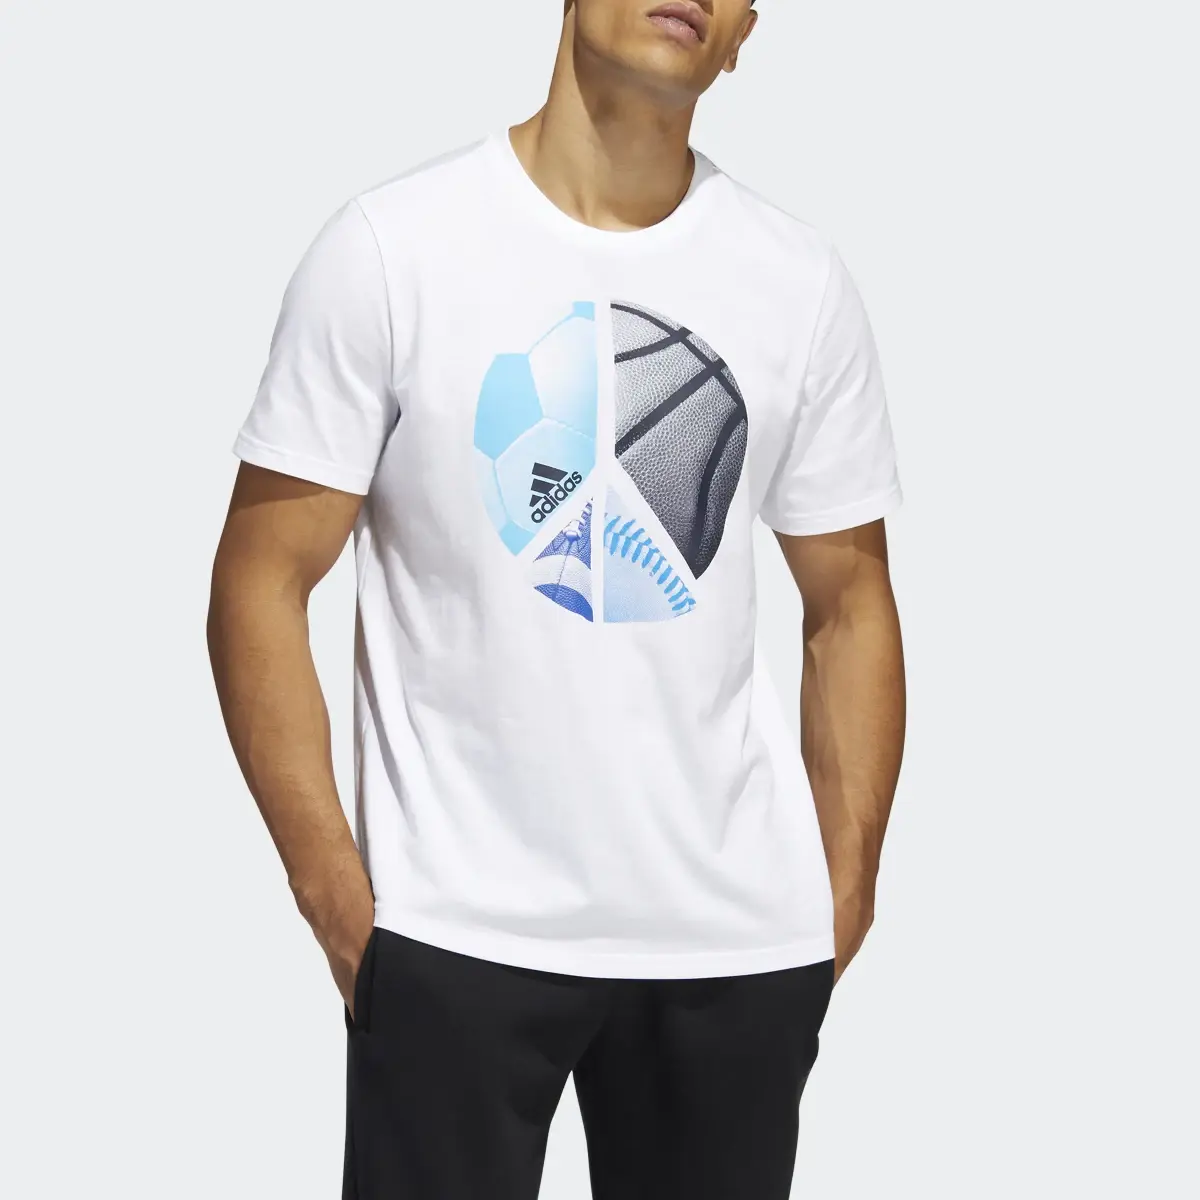 Adidas T-shirt graphique Multiplicity. 1